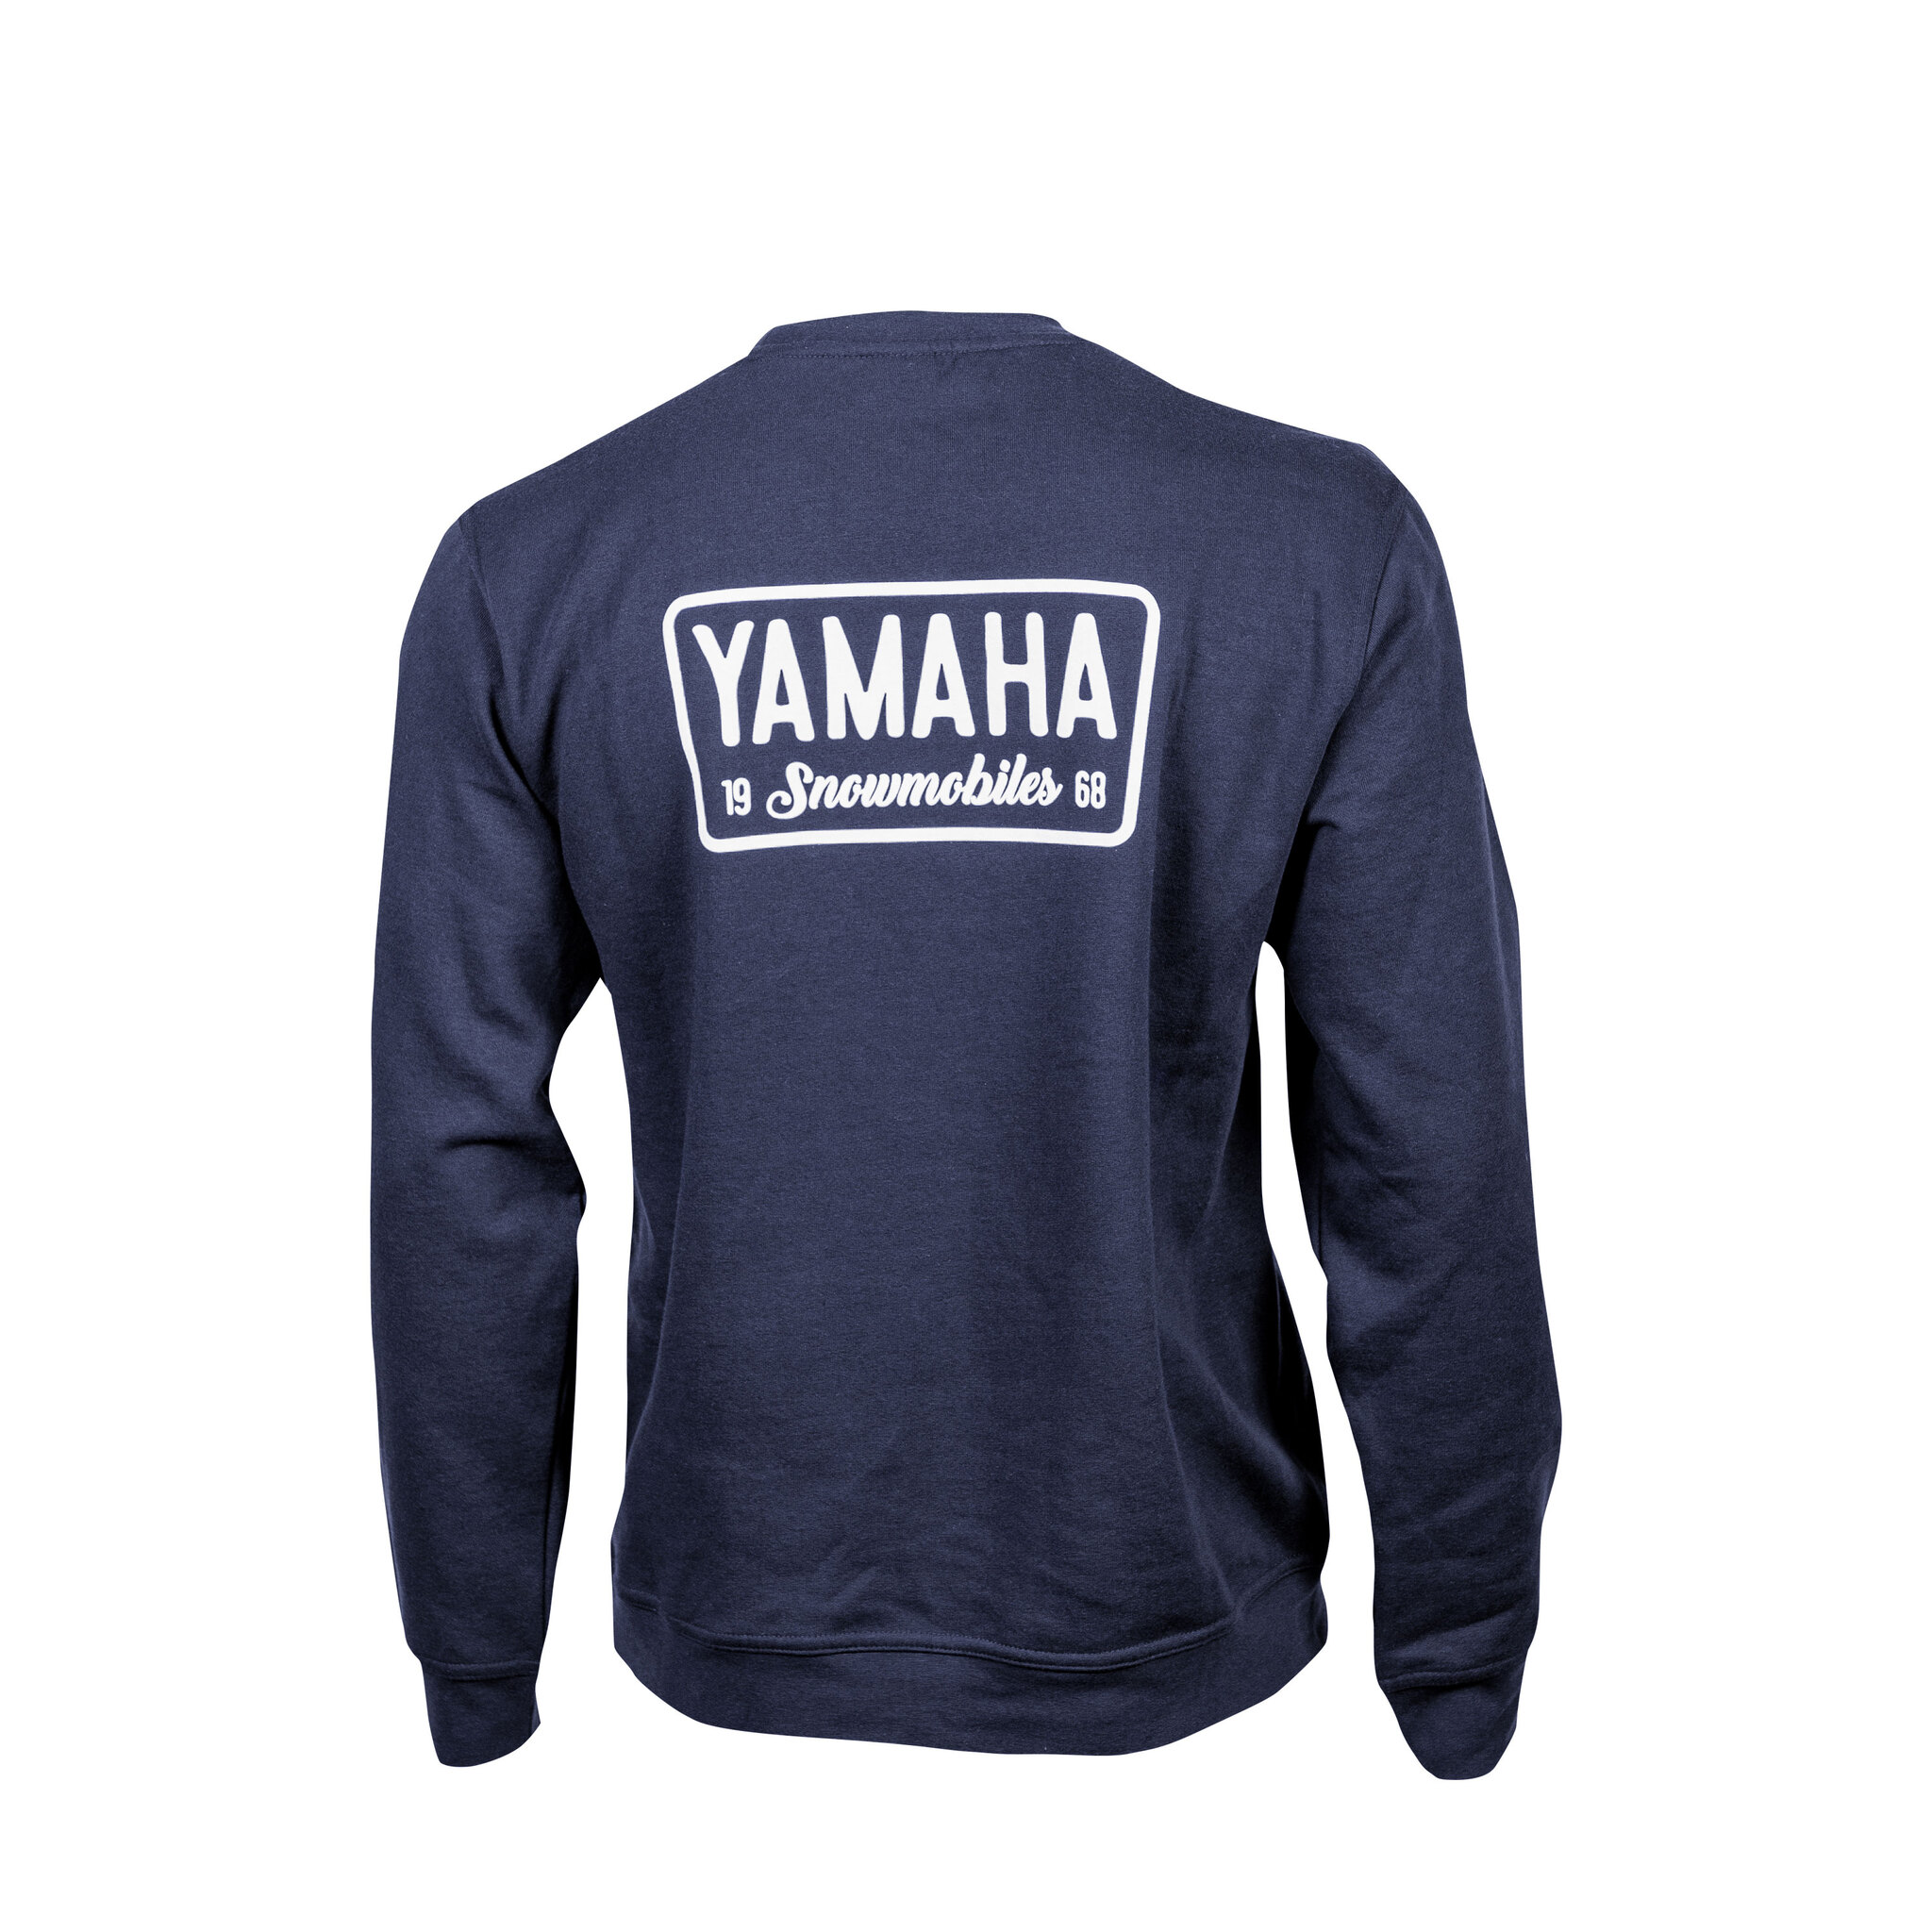 Yamaha 1968 Snowmobile Crewneck Sweater Small navy blue